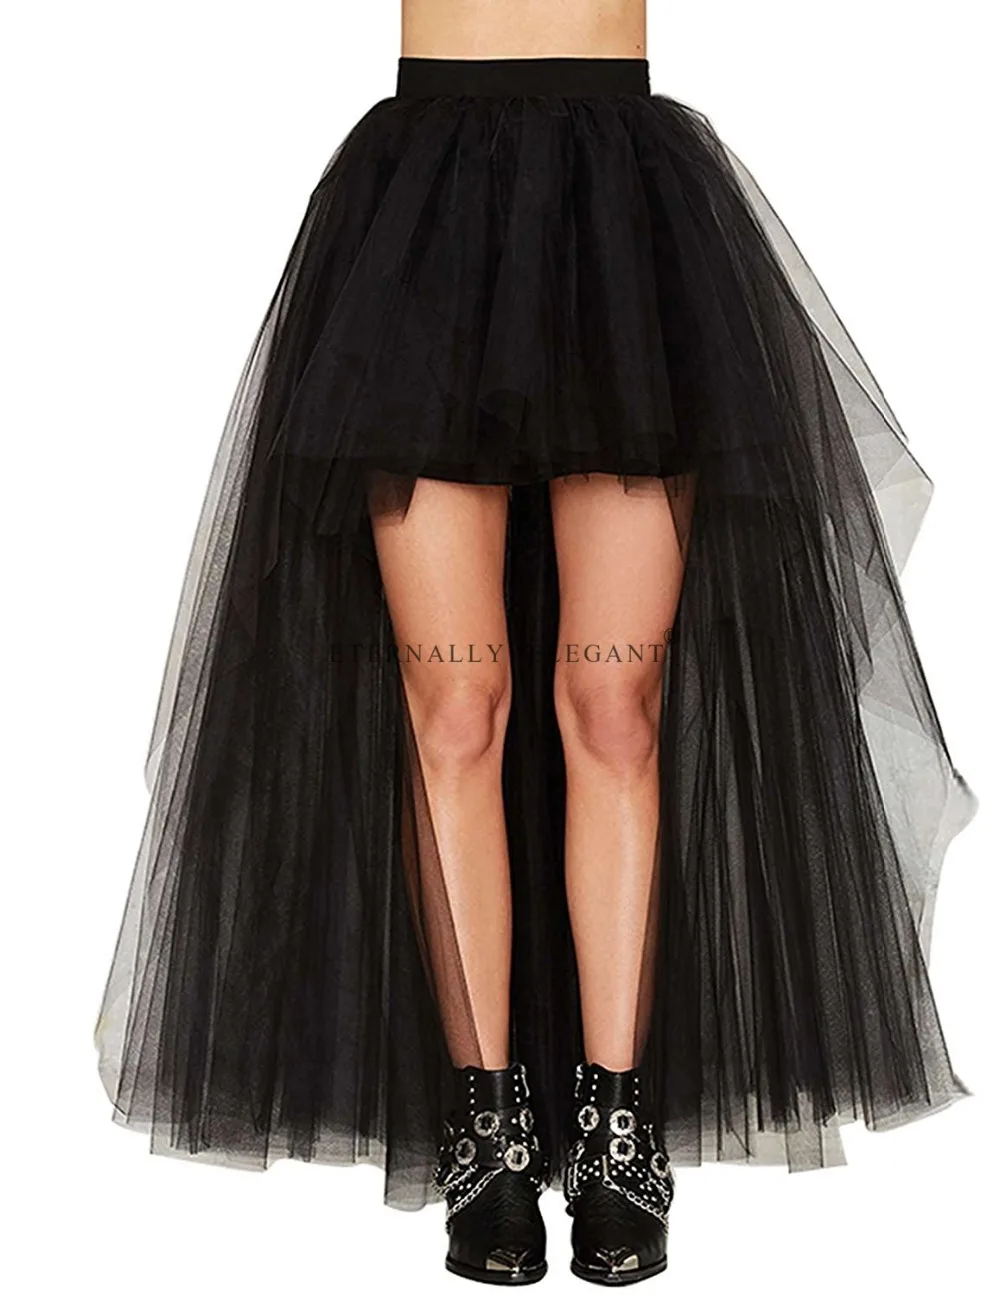 2018 Sexy Short Front Long Back Tulle 4 Color Crinoline Women Skirt Dress Vintage Tutu skirt Party Dance Lolita petticoat EE6658